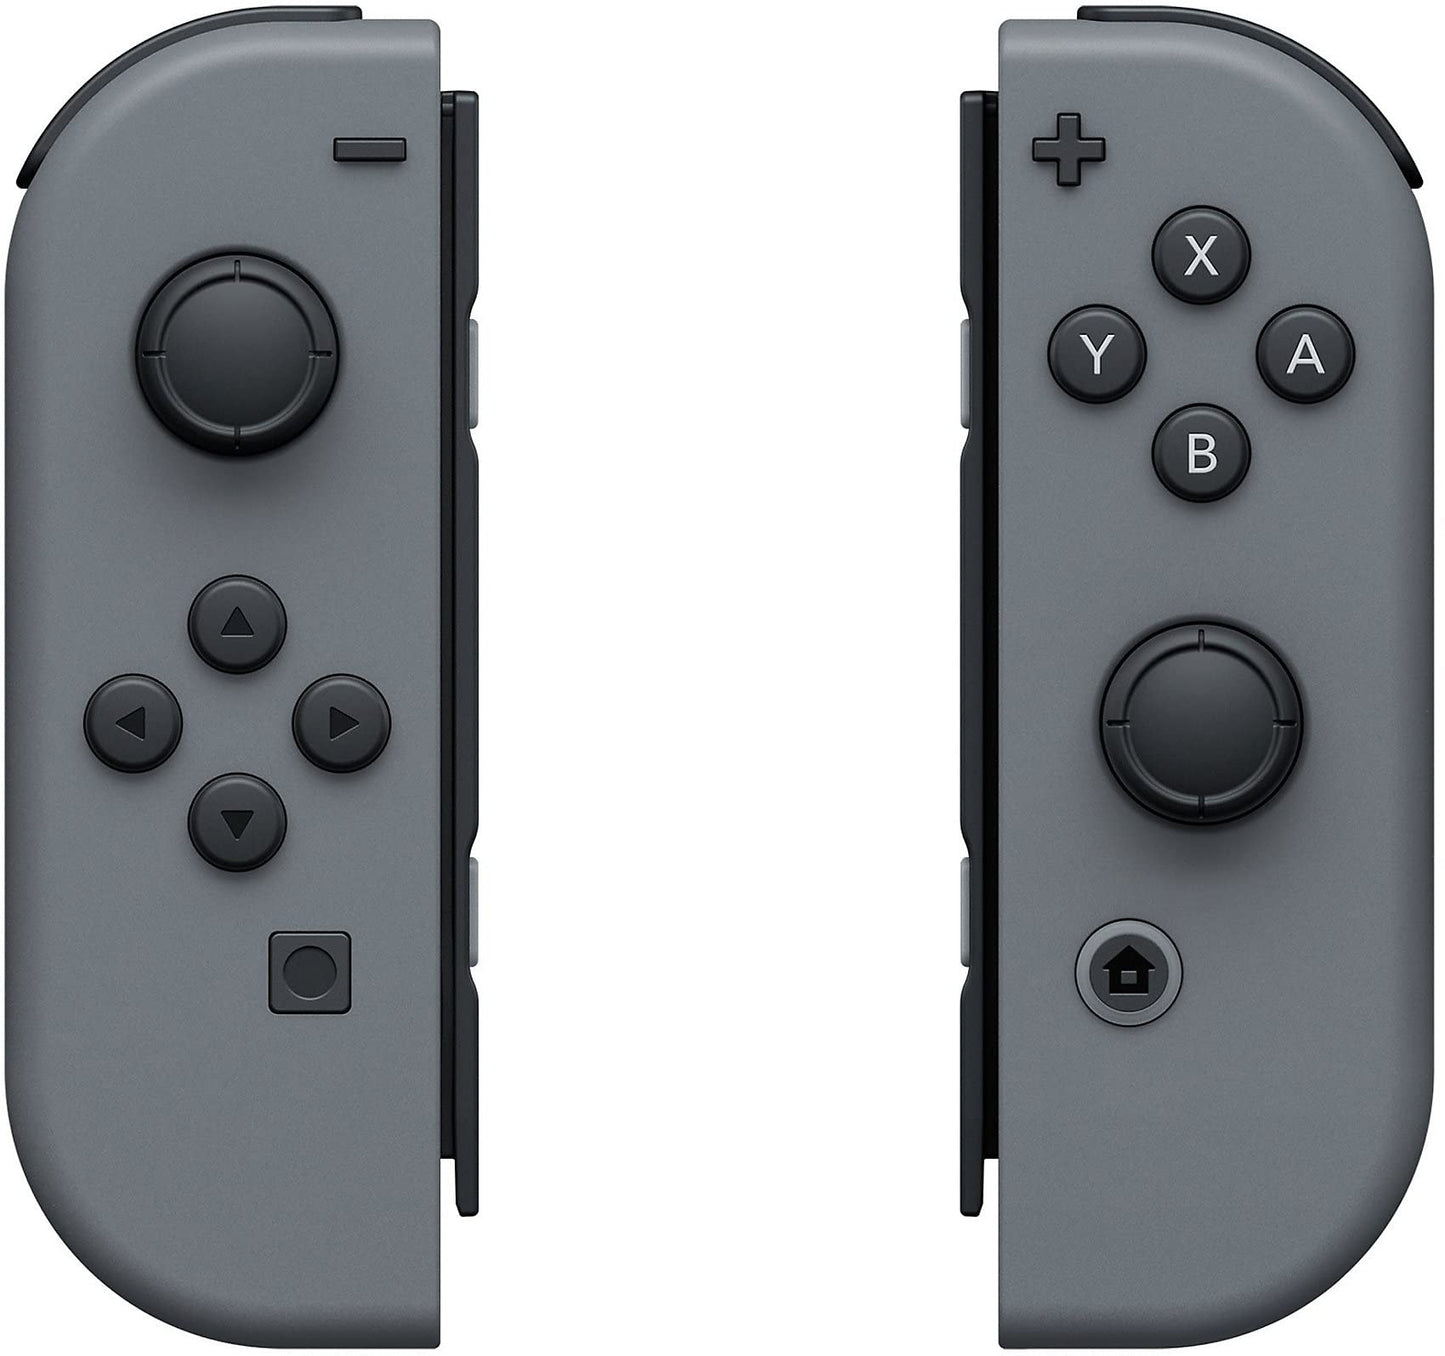 Nintendo Switch Konsole